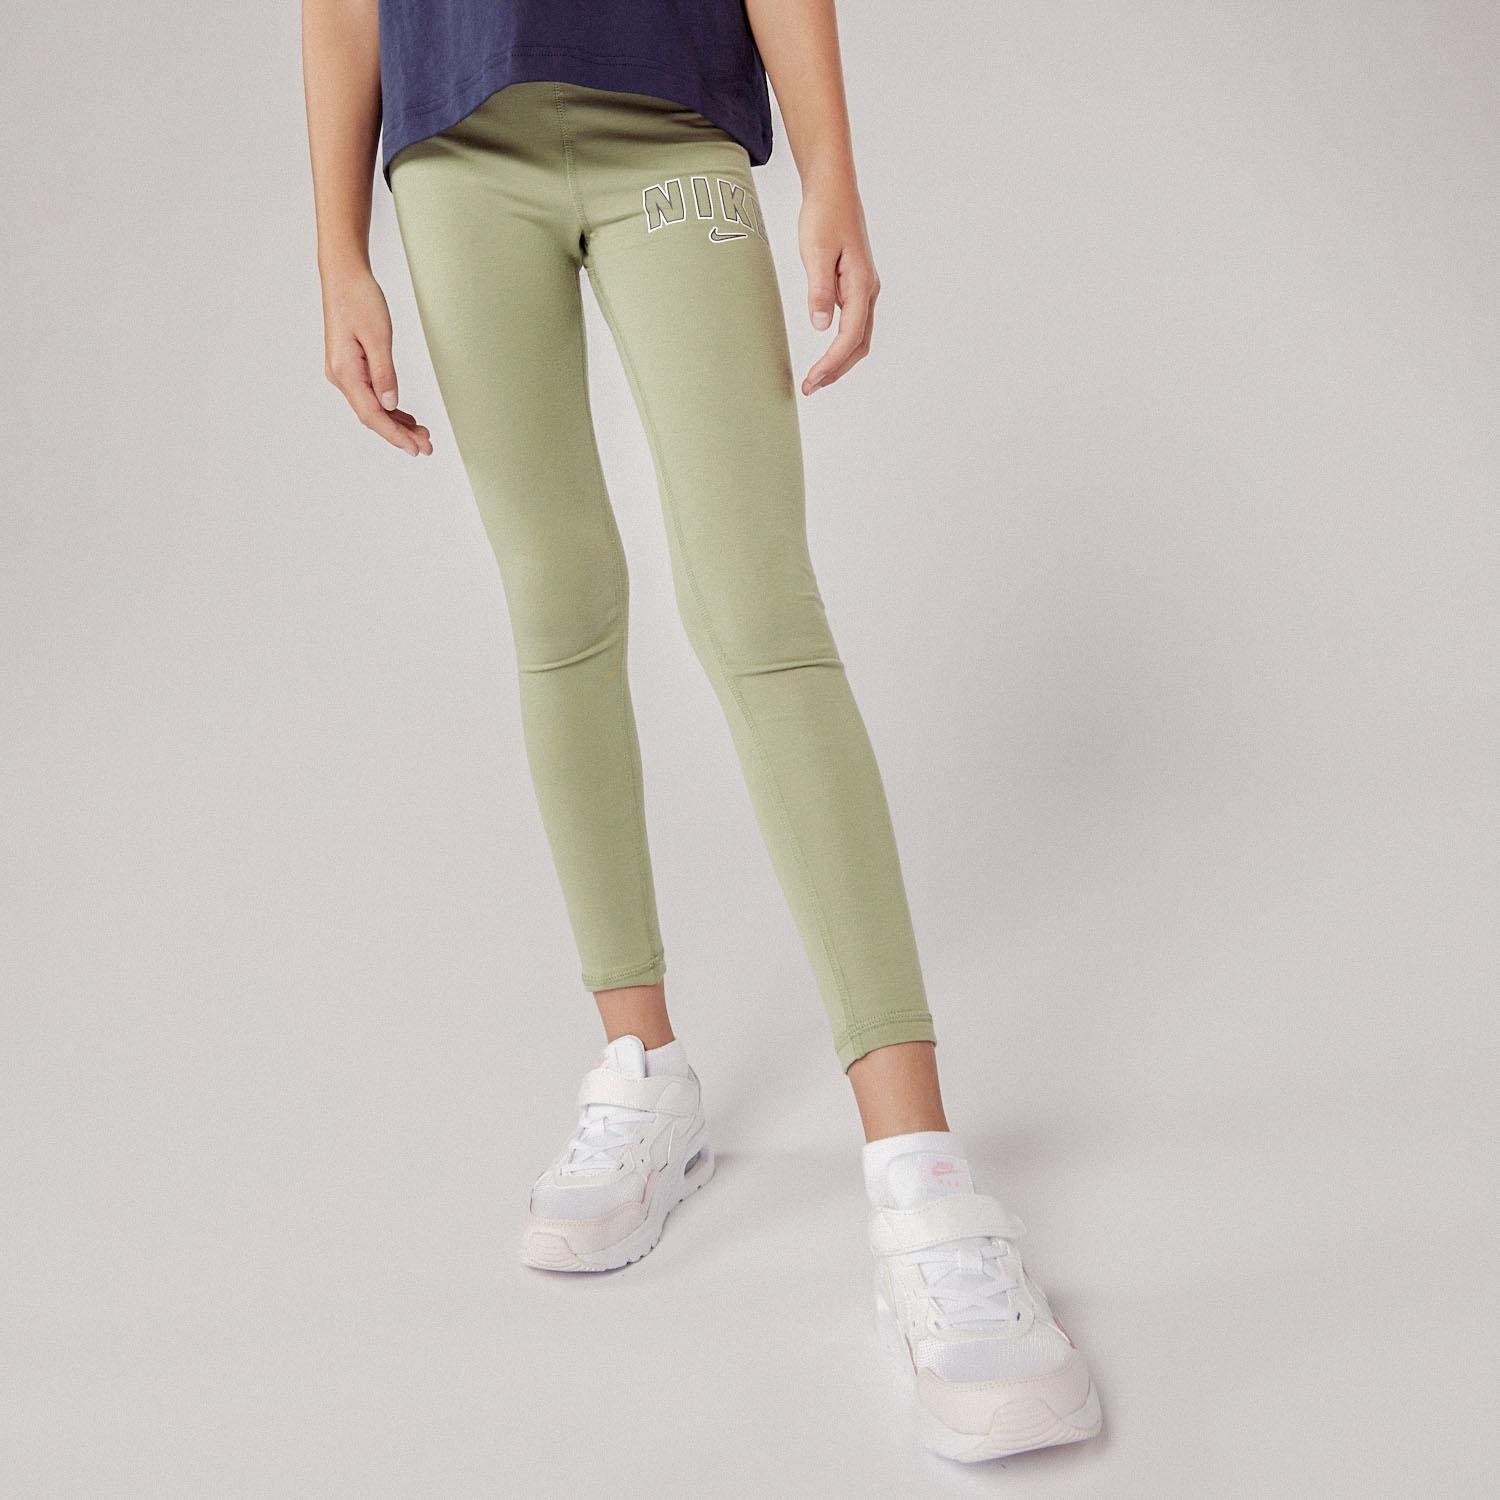 Nike Nike legging groen kinderen kinderen